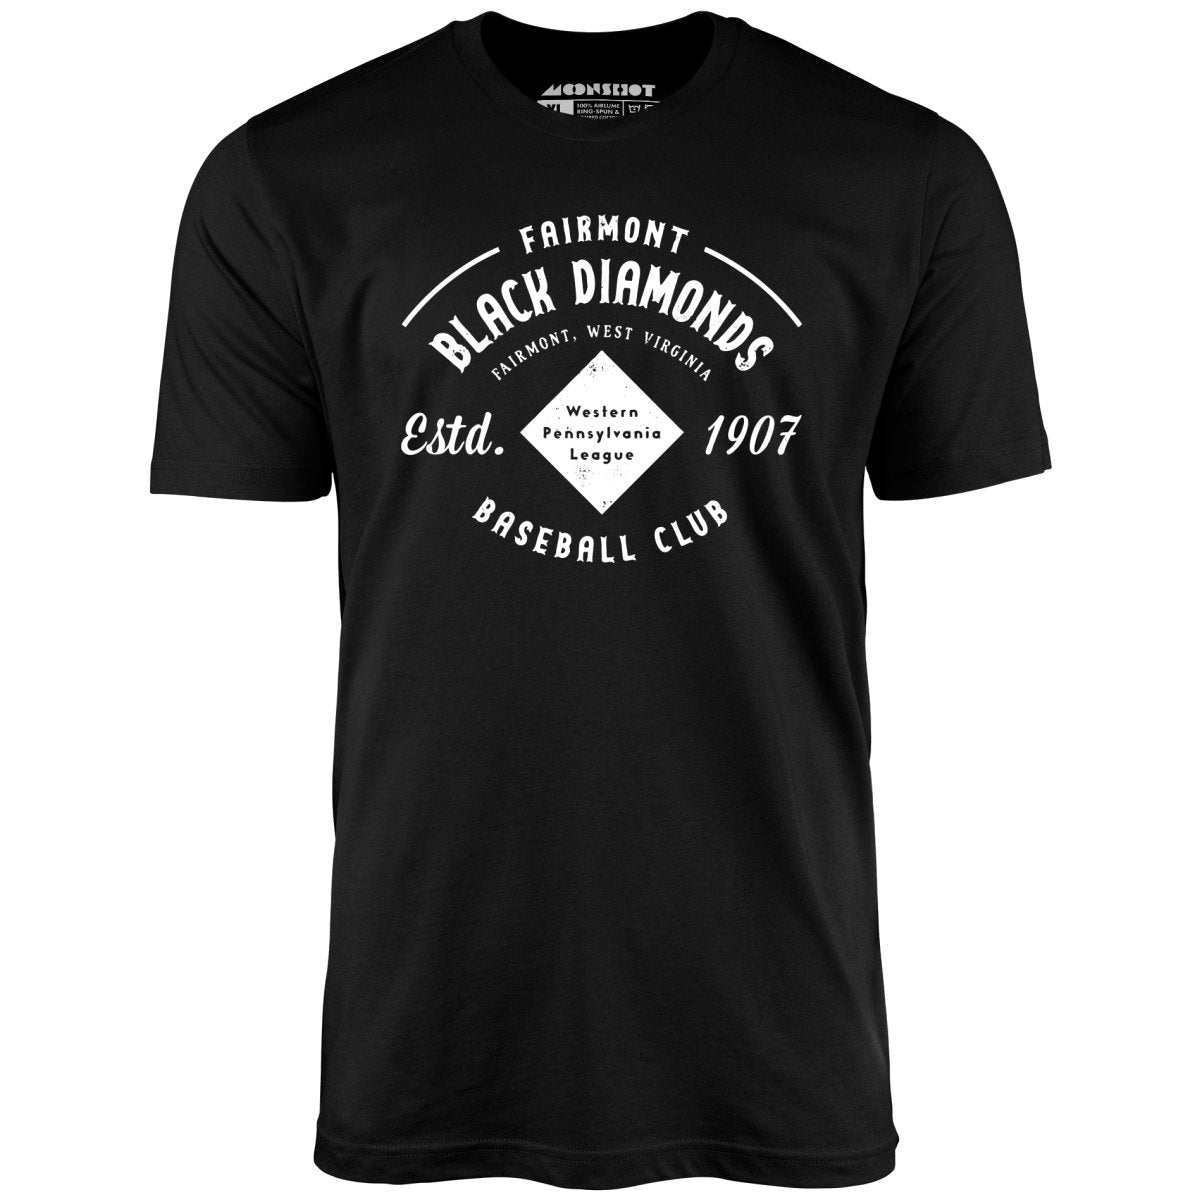 Fairmont Black Diamonds - West Virginia - Vintage Defunct Baseball Teams - Unisex T-Shirt